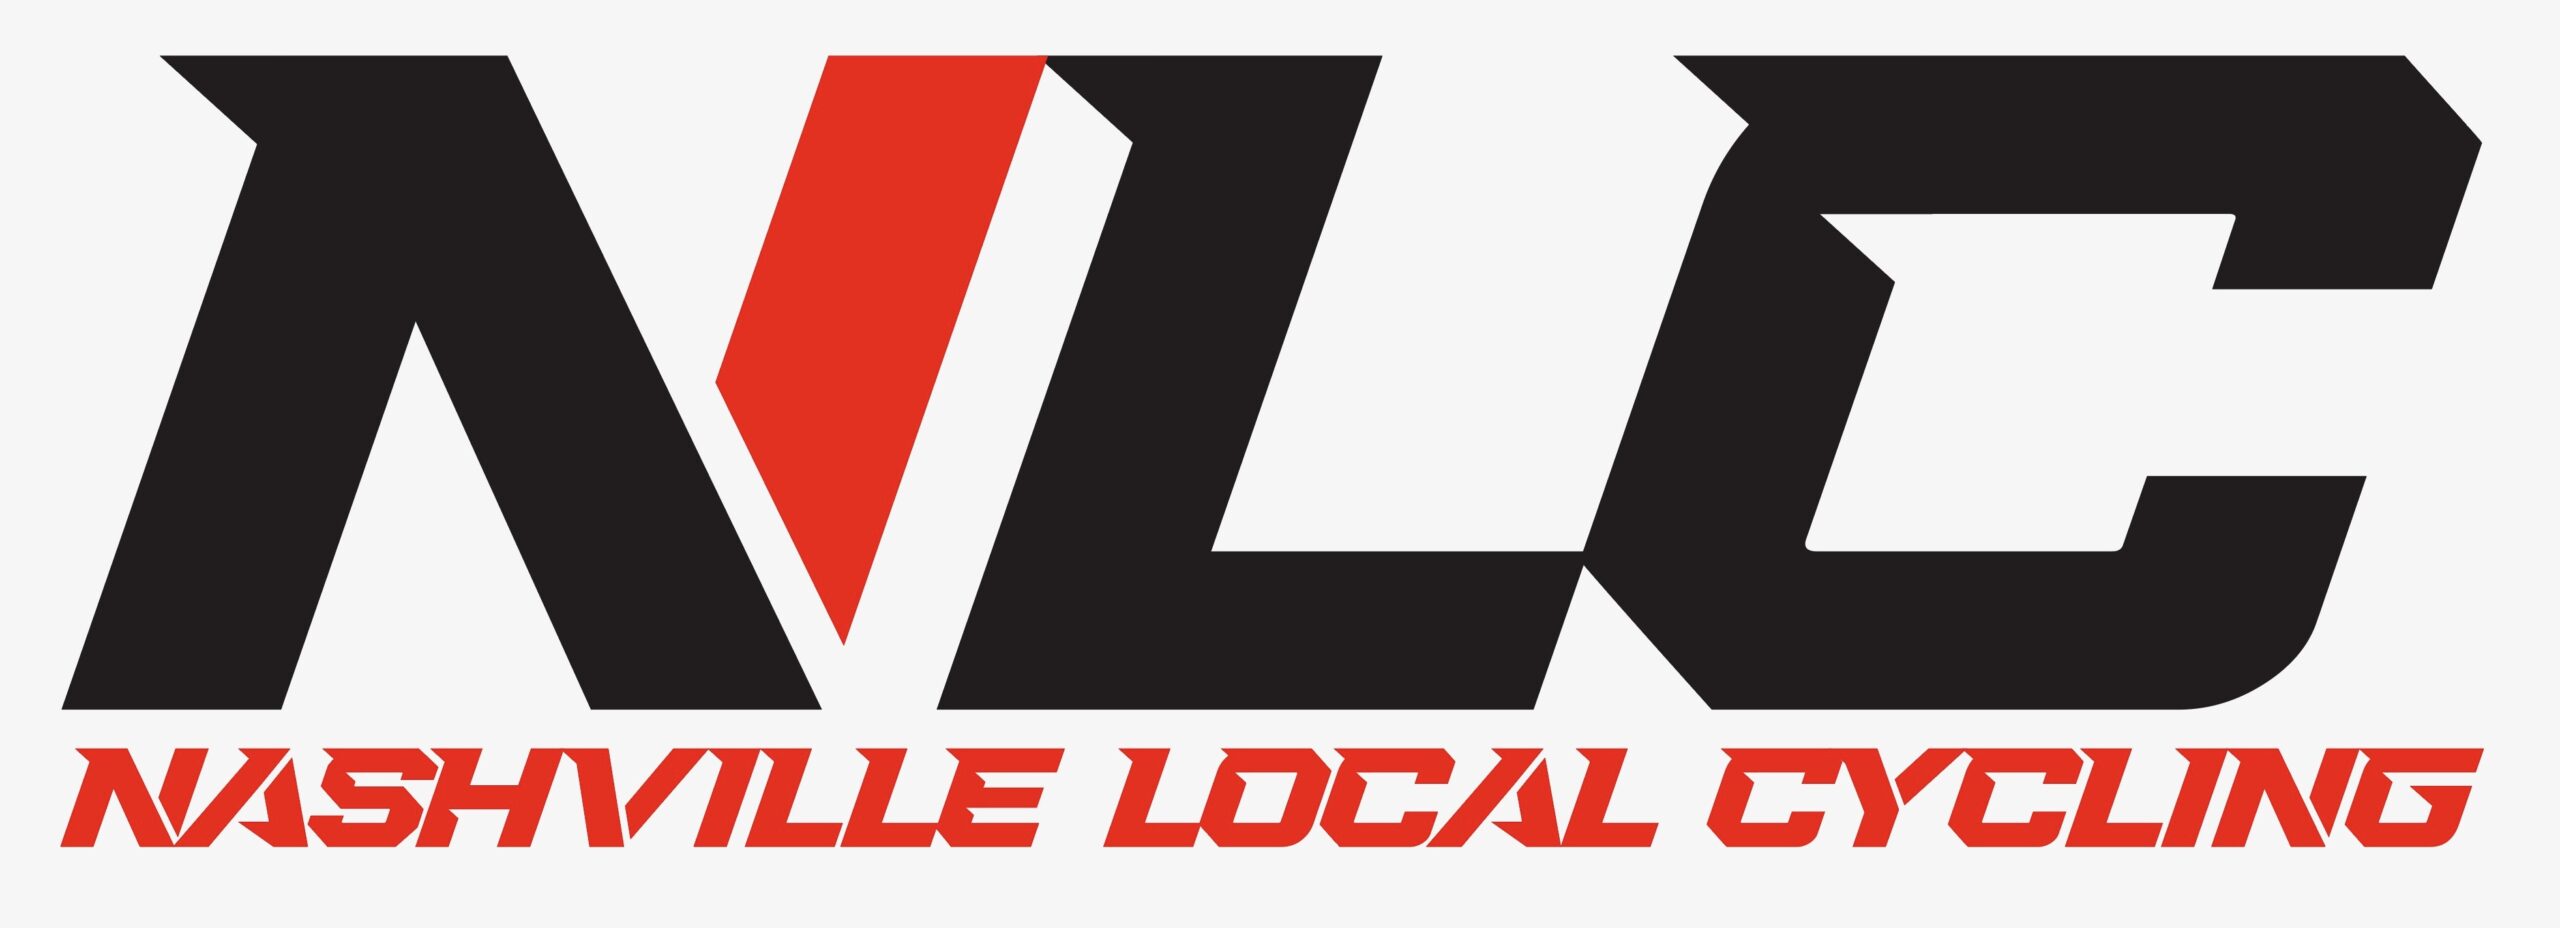 Nashville Local Cycling NLC Logo